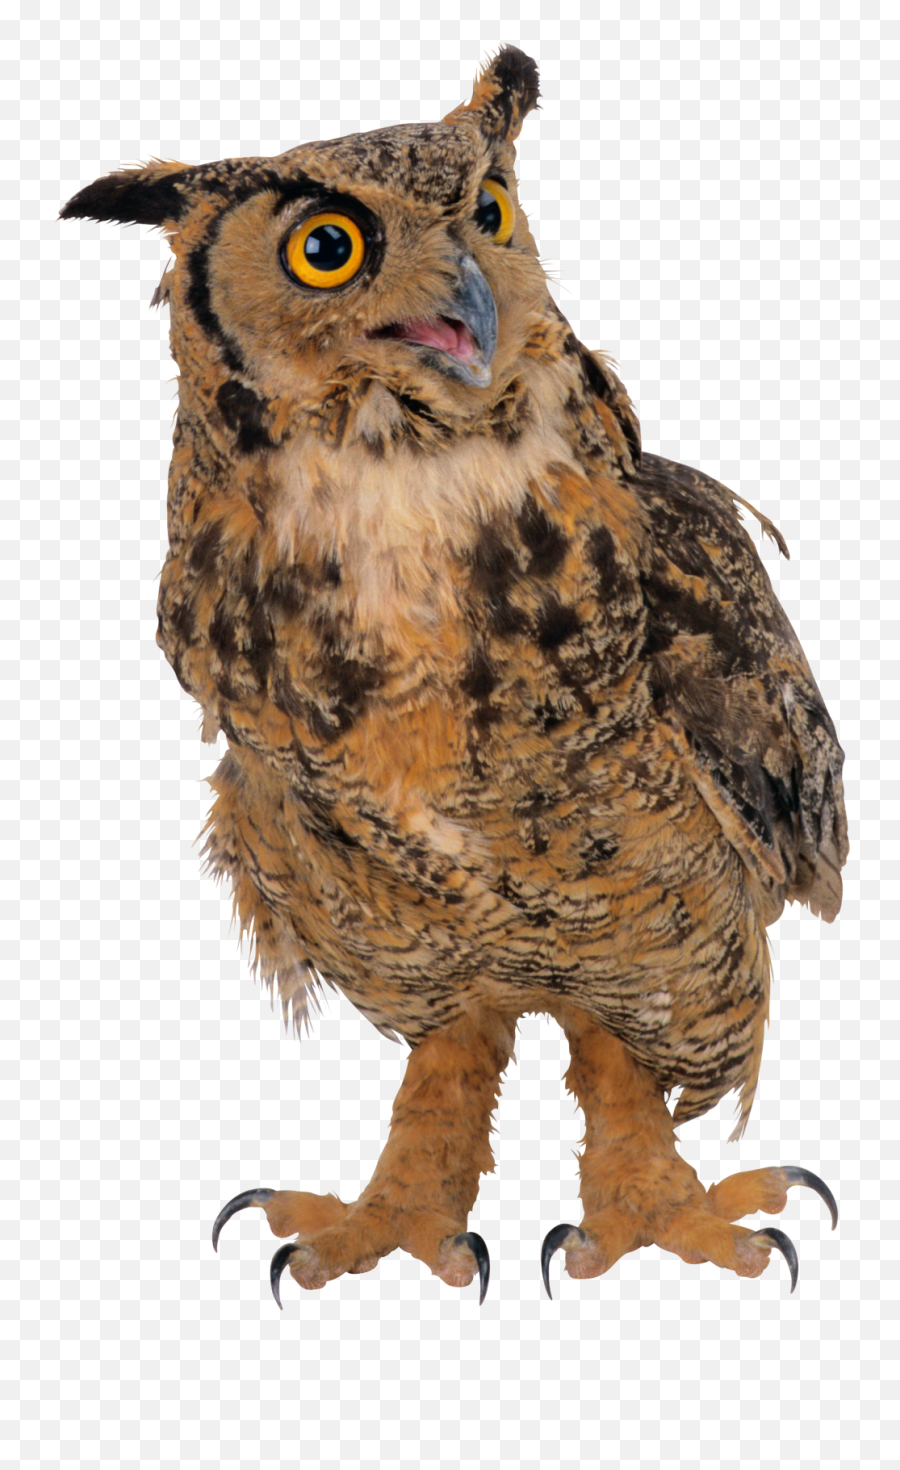 Owl Png Image Free - High Quality Image For Free Here Emoji,Owl Emoji